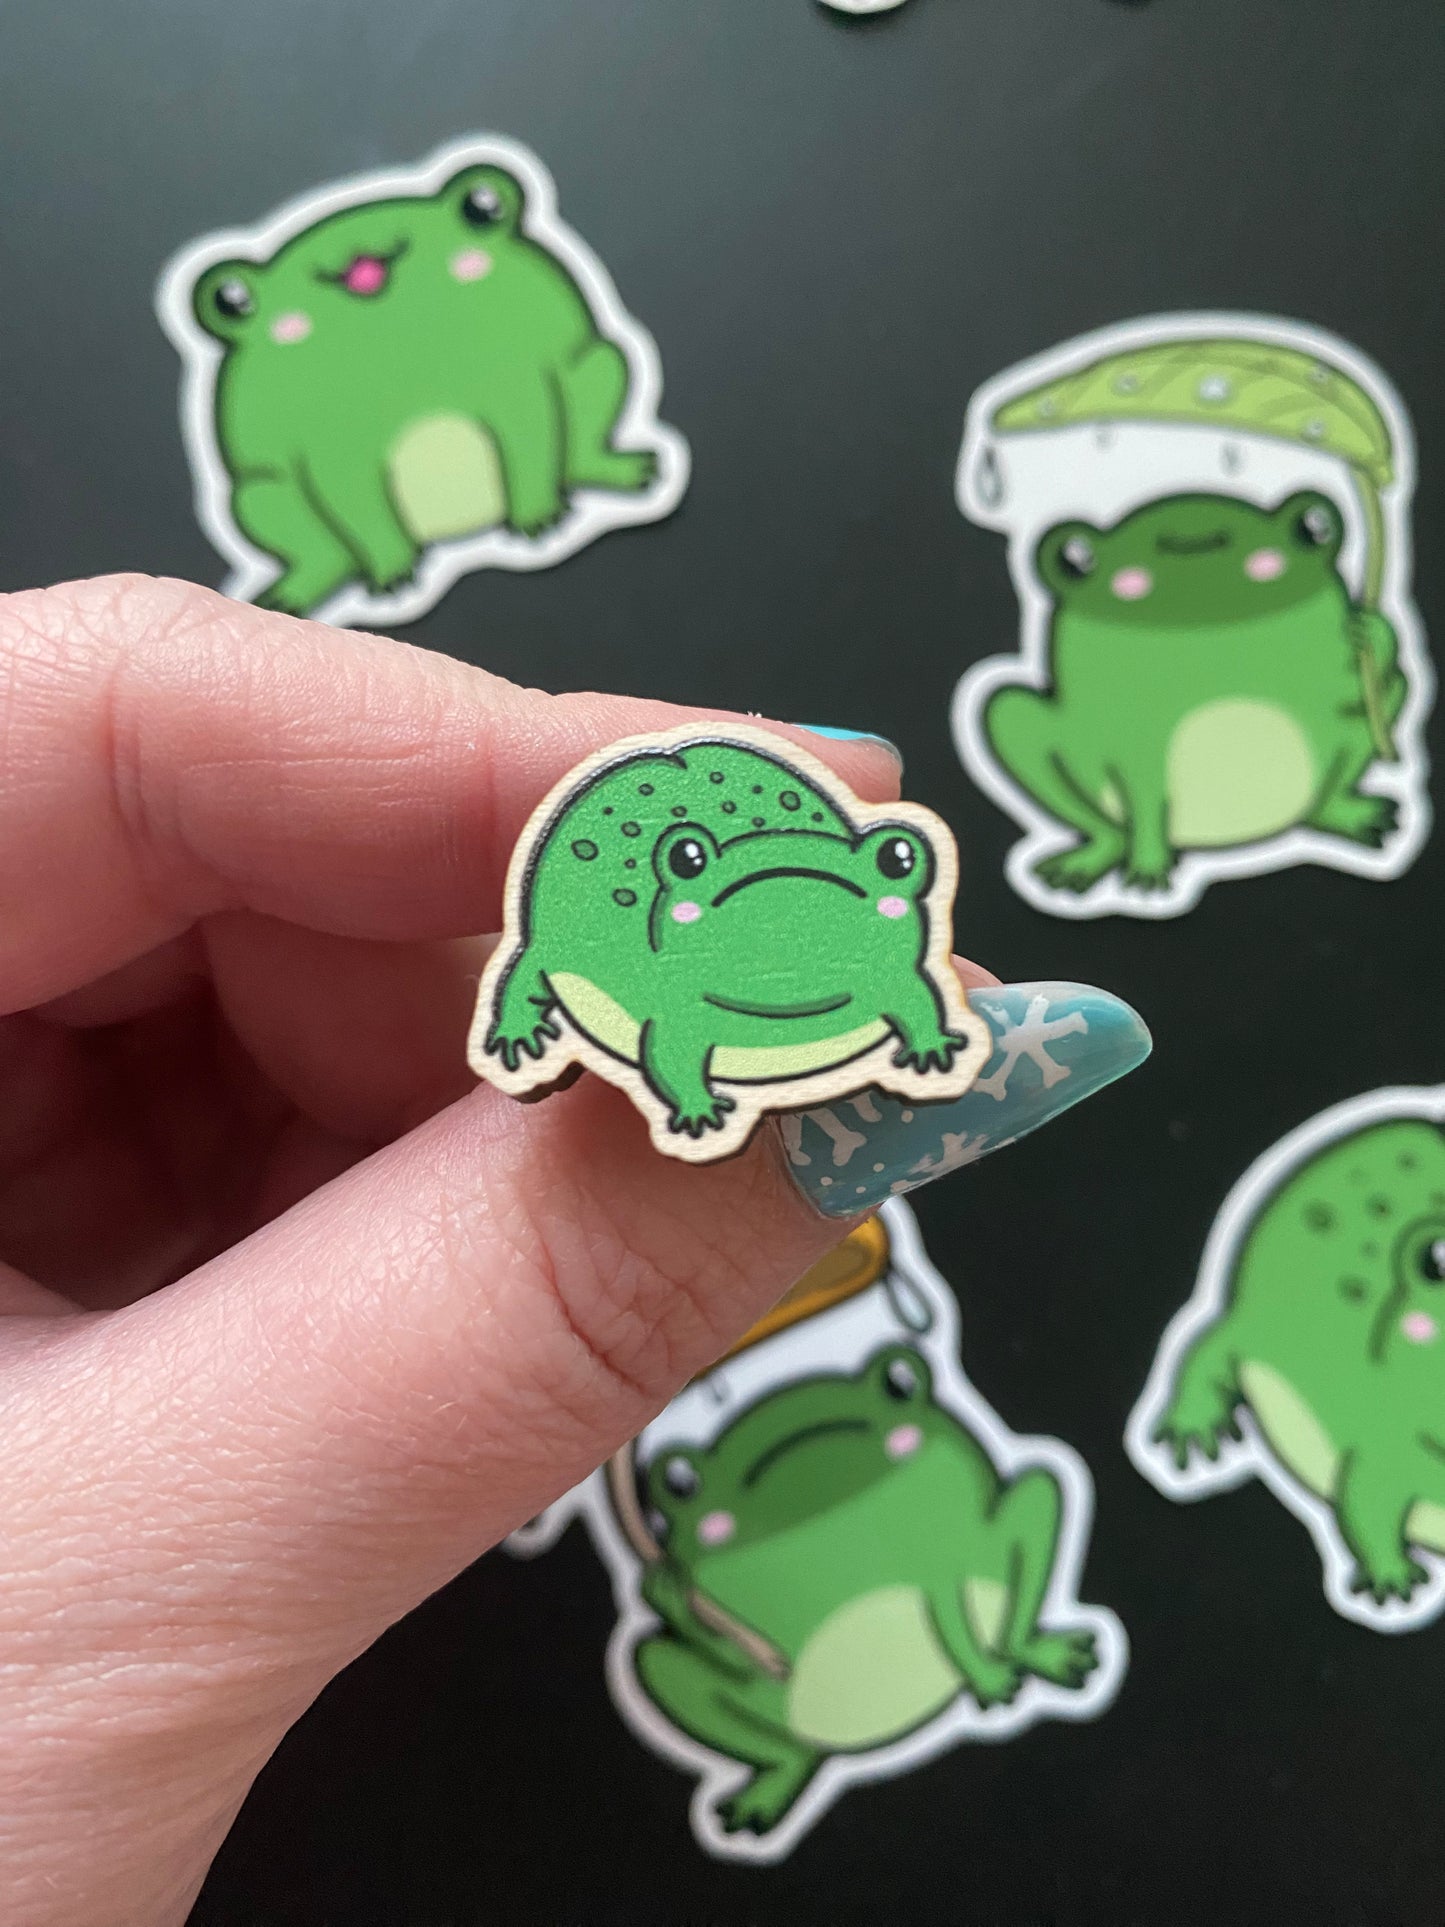 Grumpy Frog wooden pin